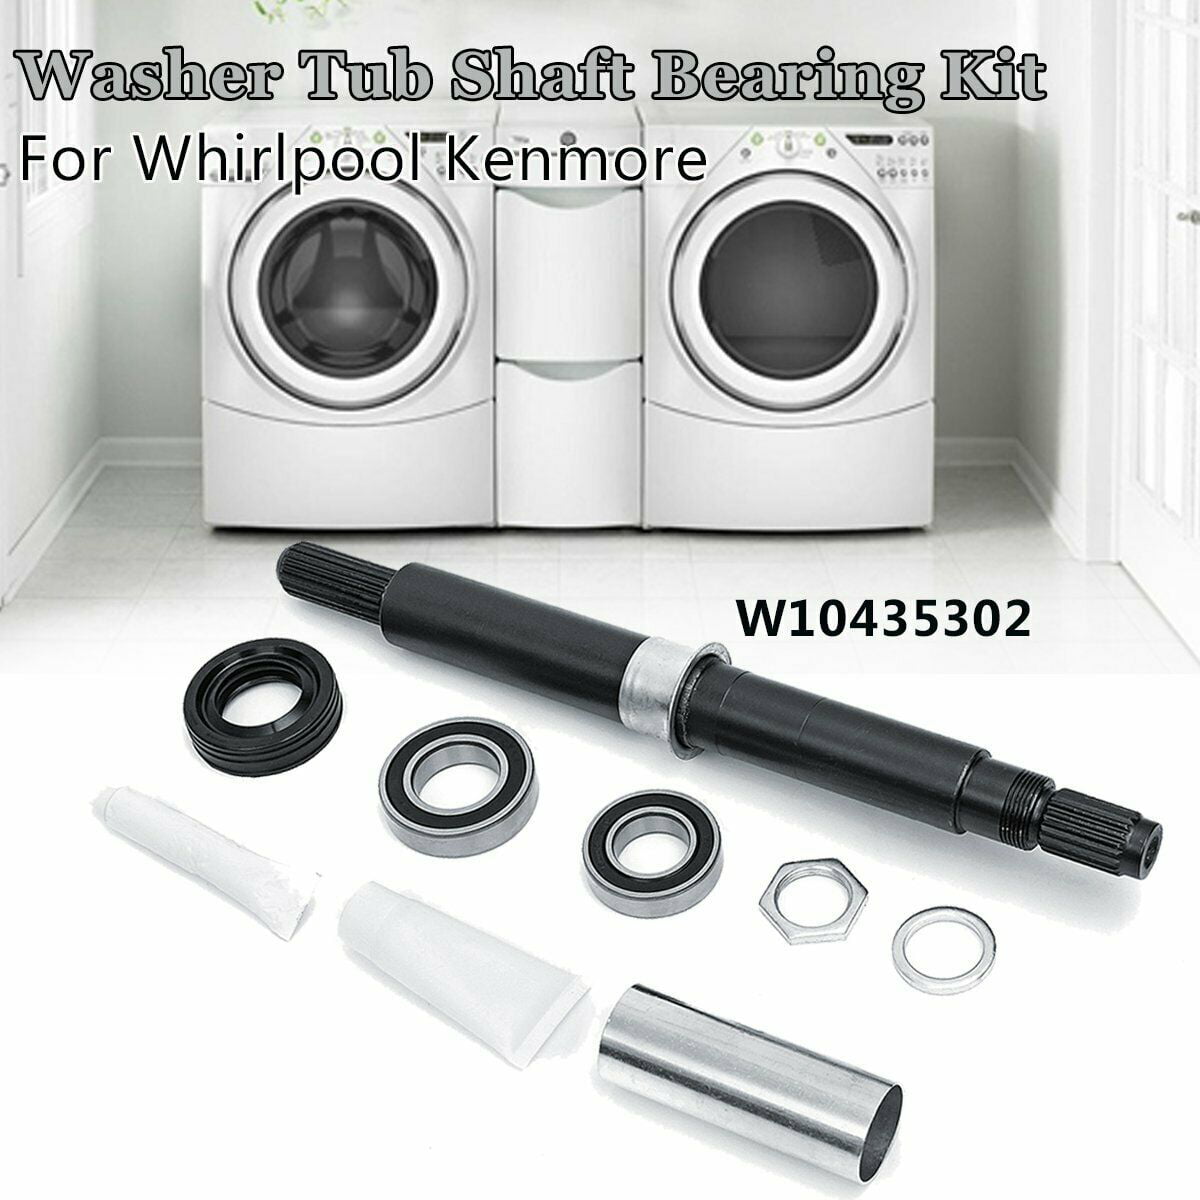 For Maytag Whirlpool Kenmore Washer Tub Shaft Bearing Kits W10435302 AP5325033